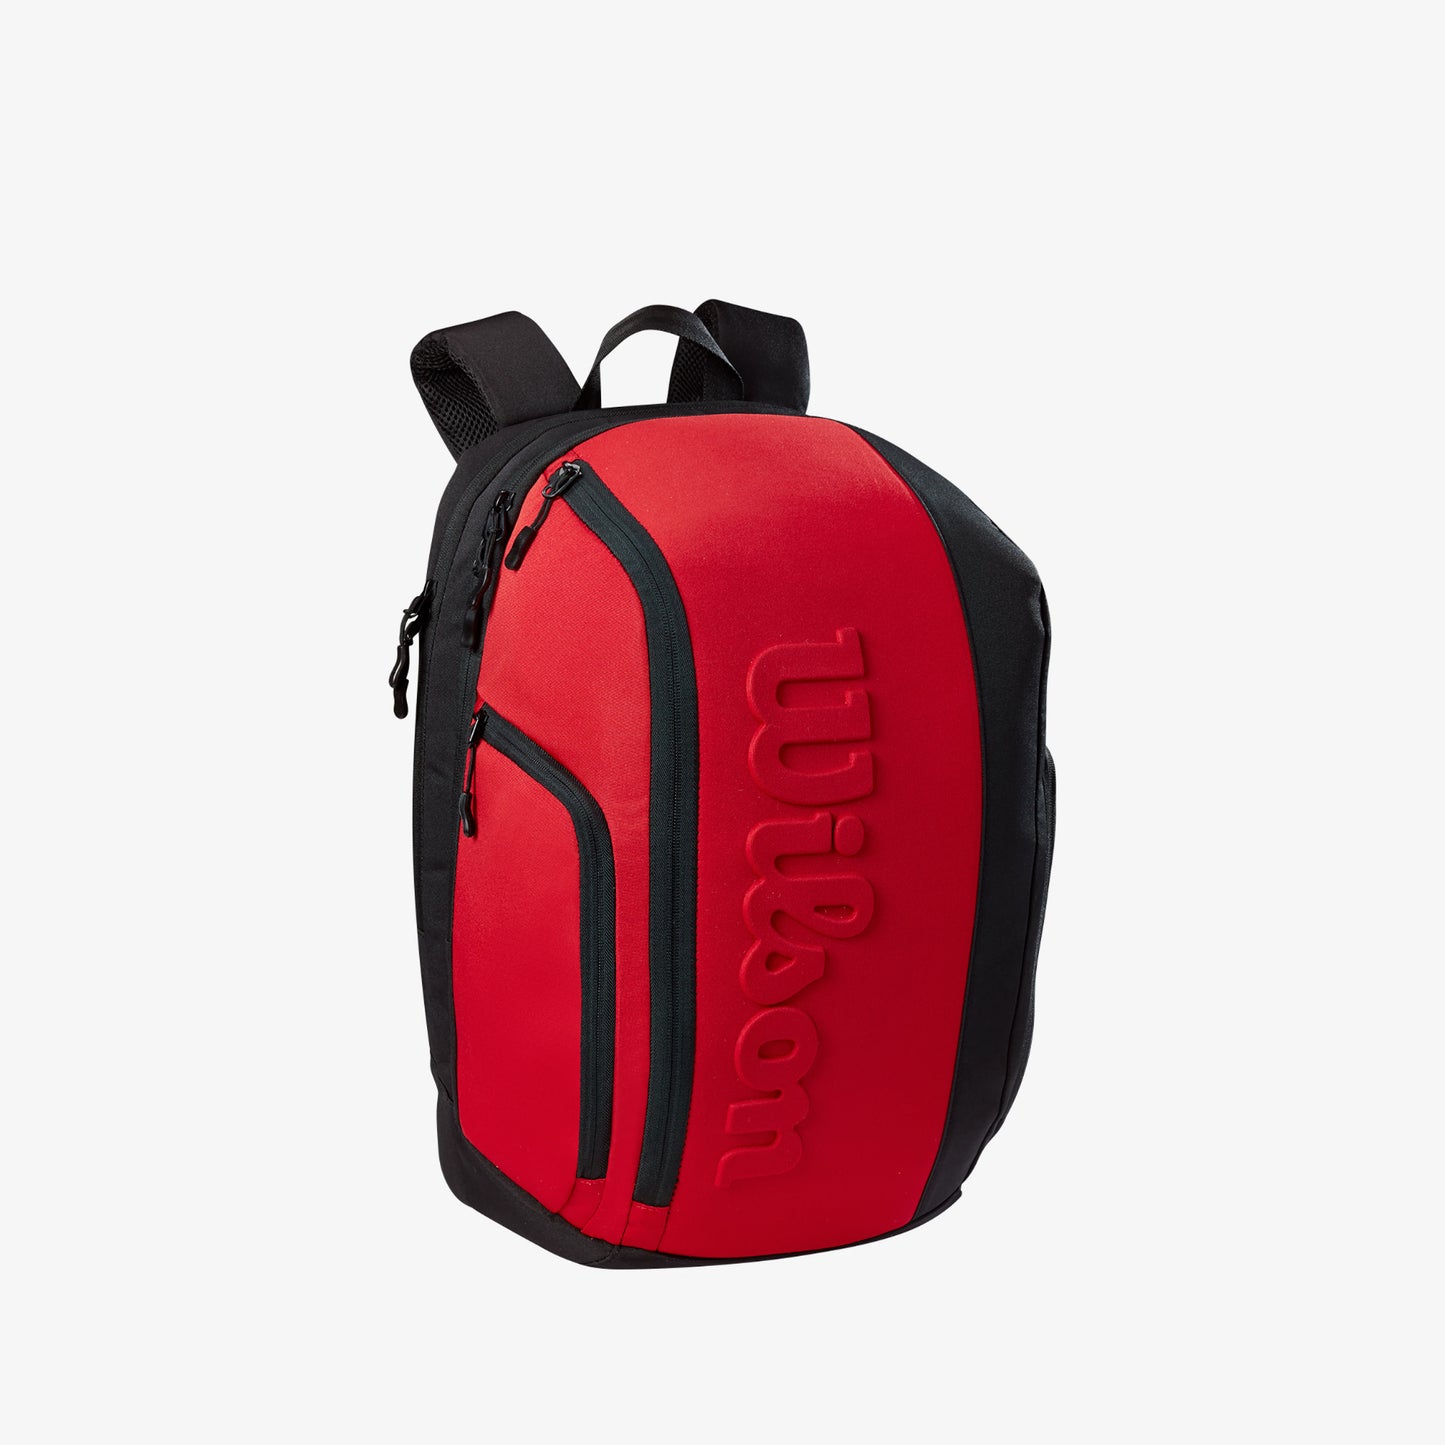 Wilson Clash Super Tour backpack